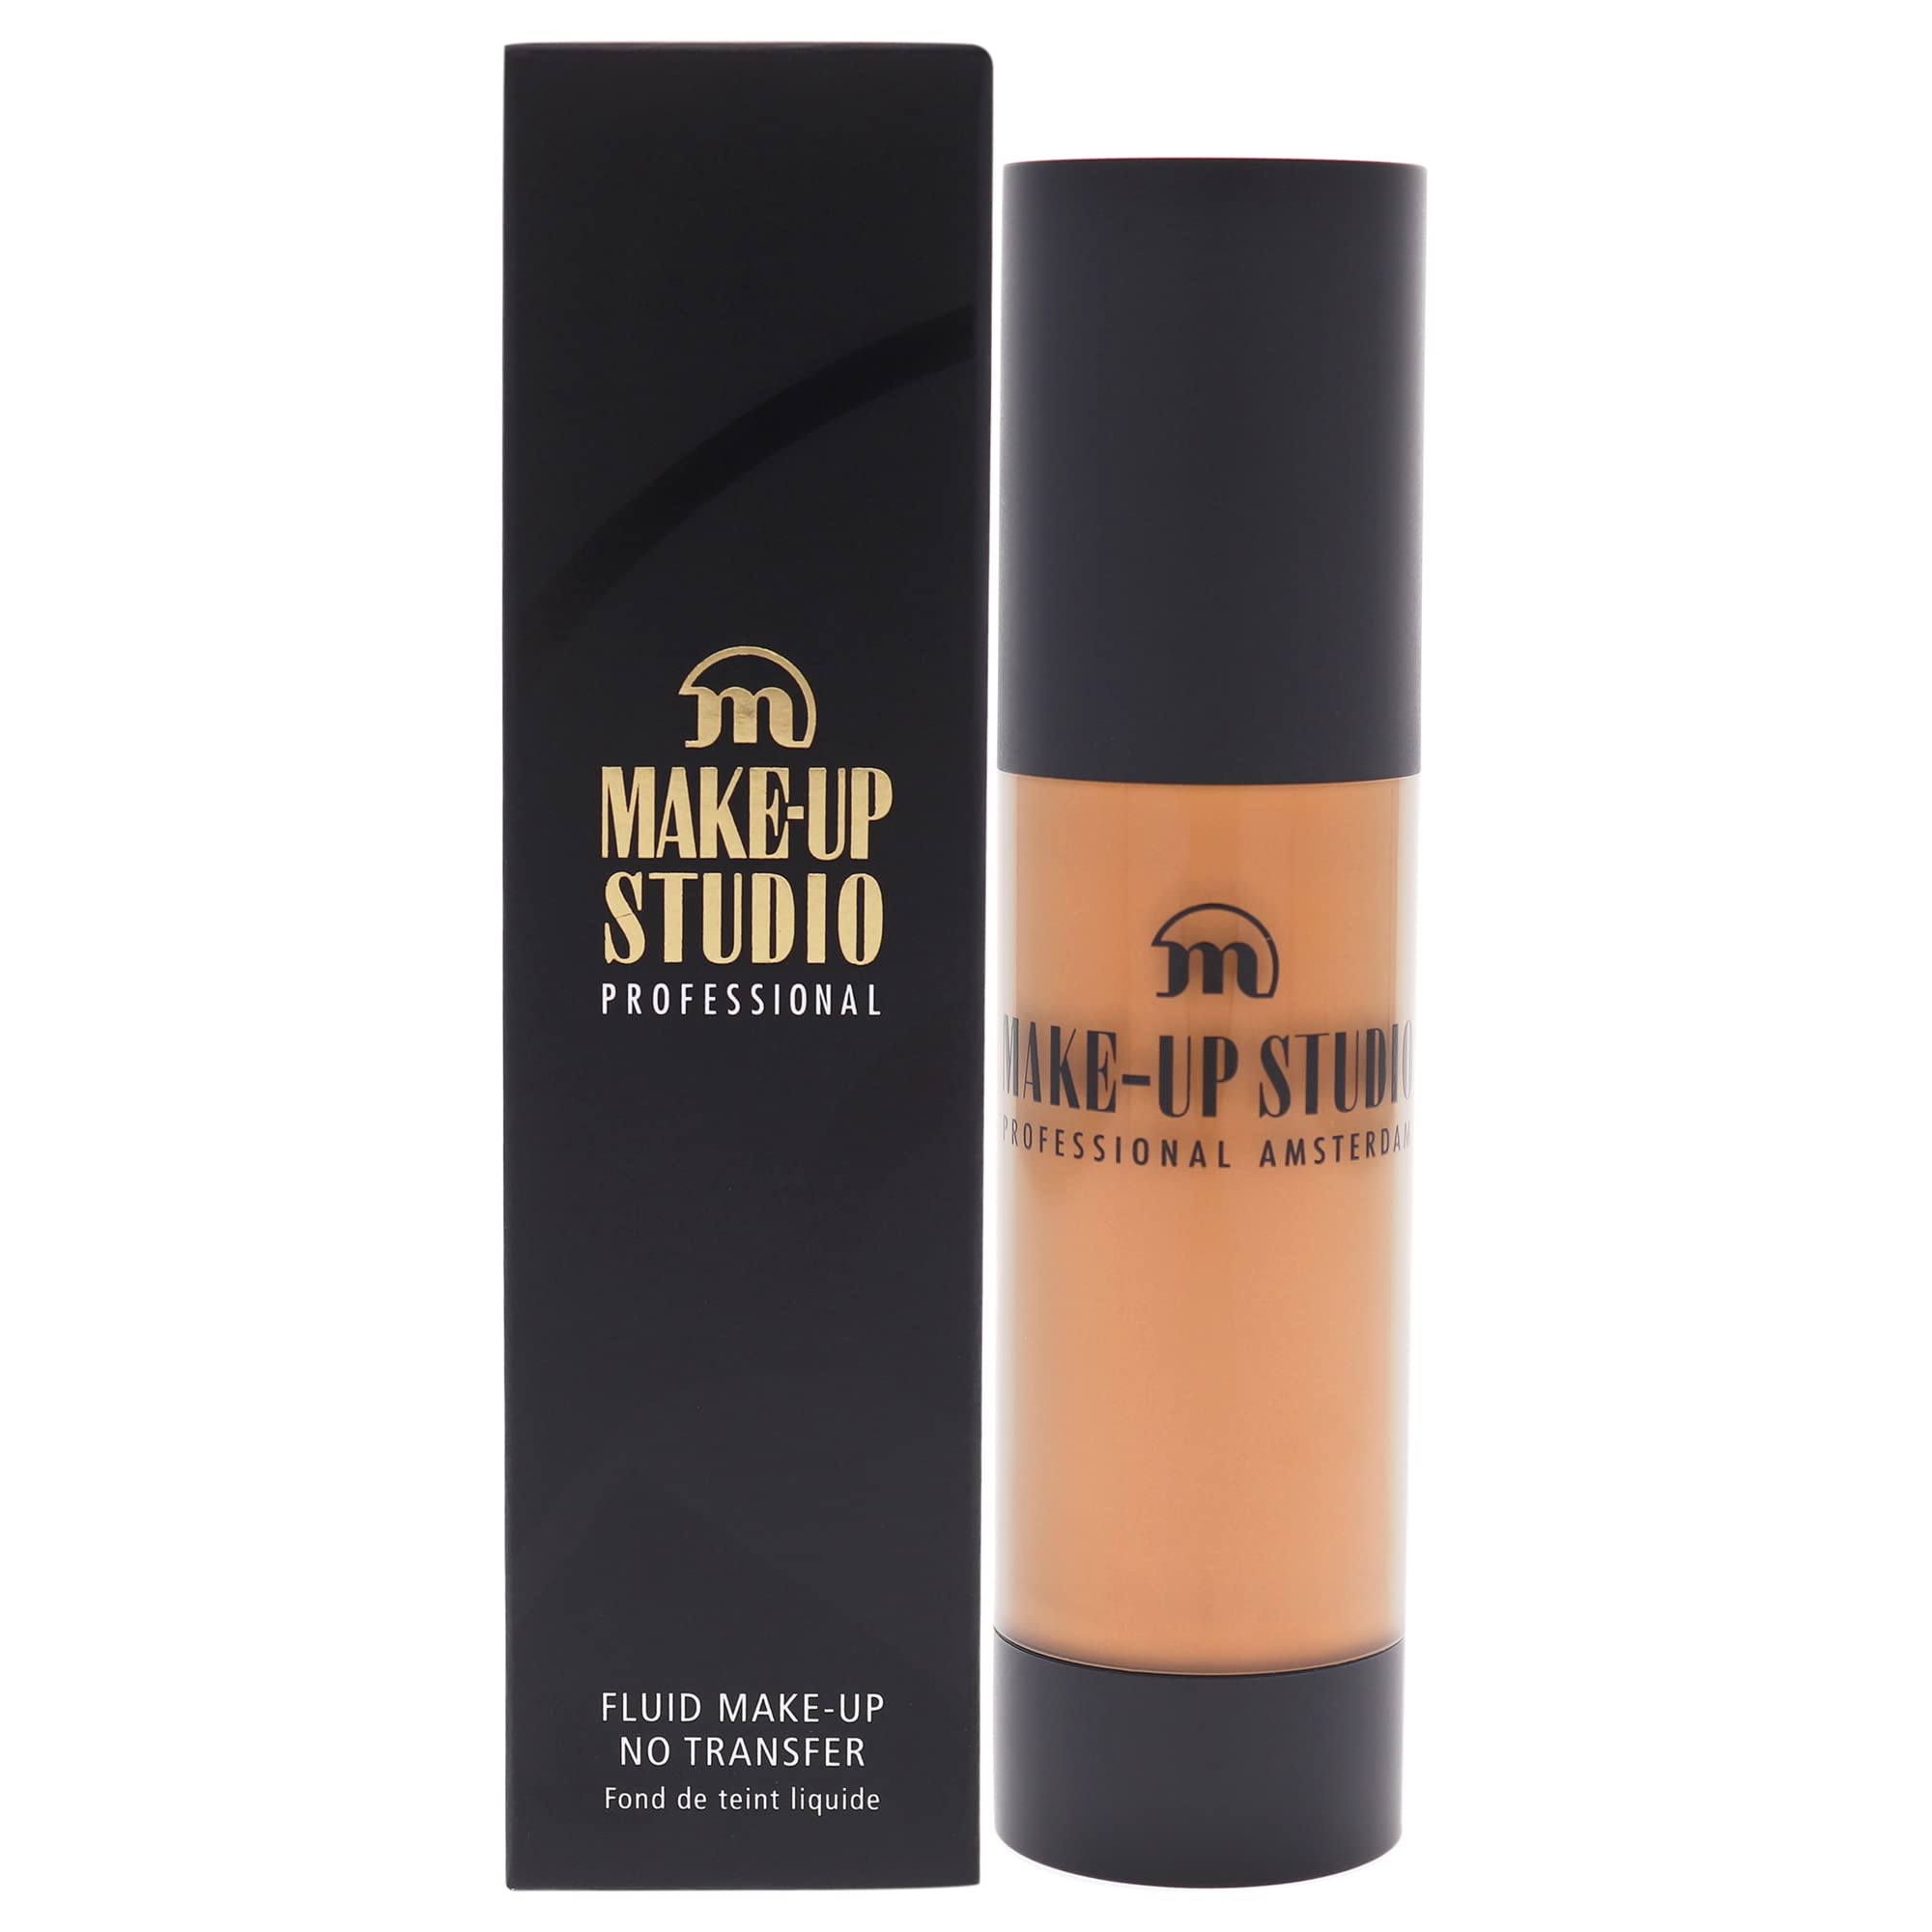 Make-up Studio Fluid Foundation No Transfer - WB5 Olive Tan